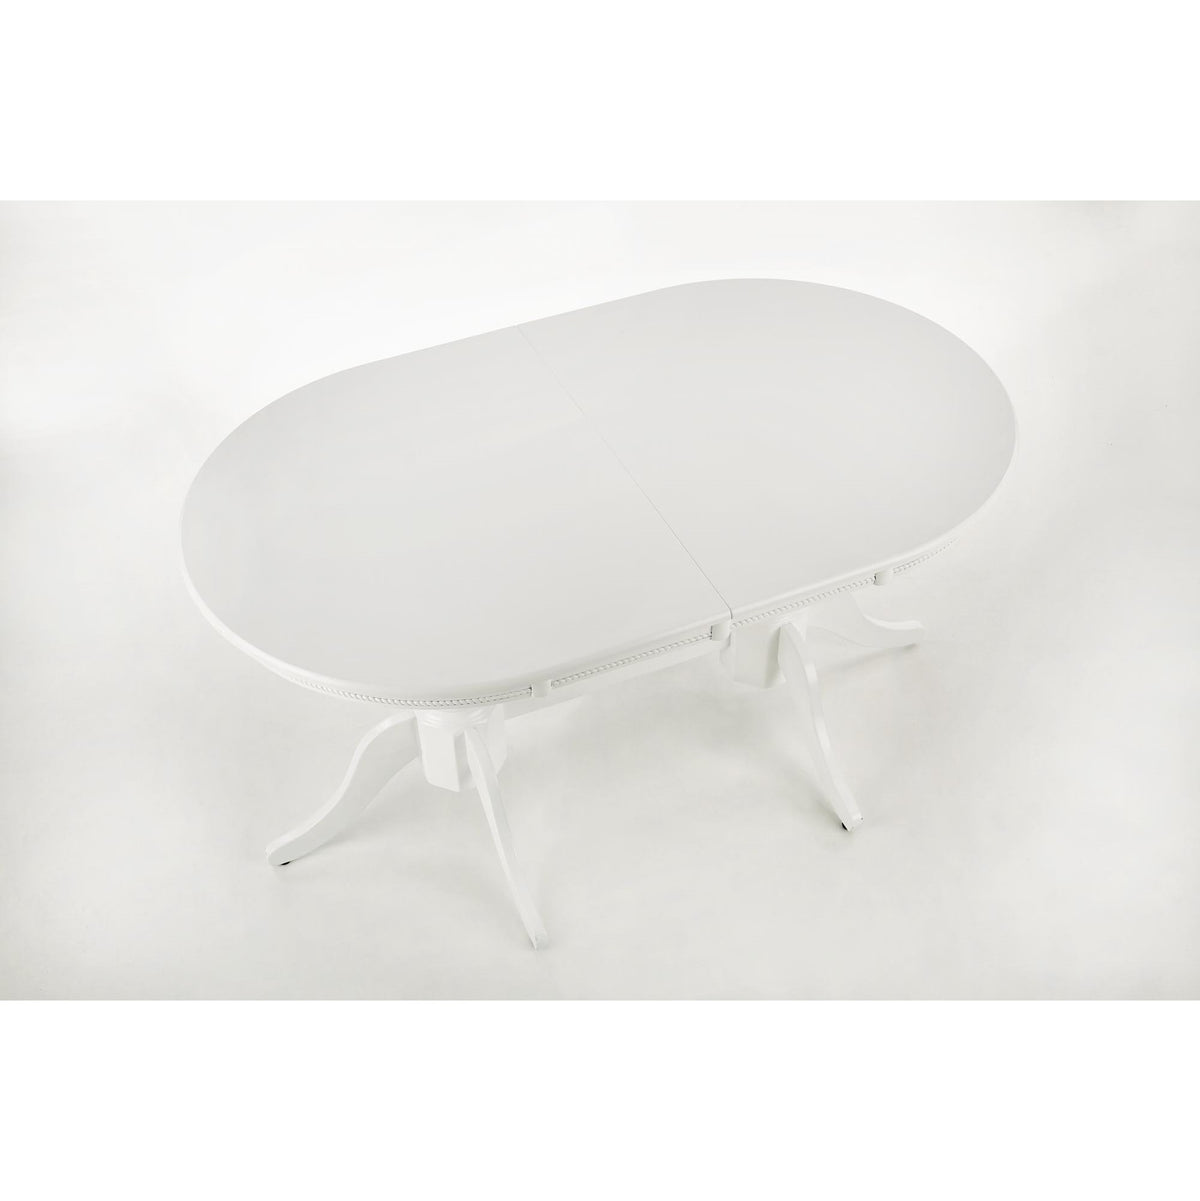 Jídelní stůl Joso rozkládací 150-190x77x90 cm (bílá)